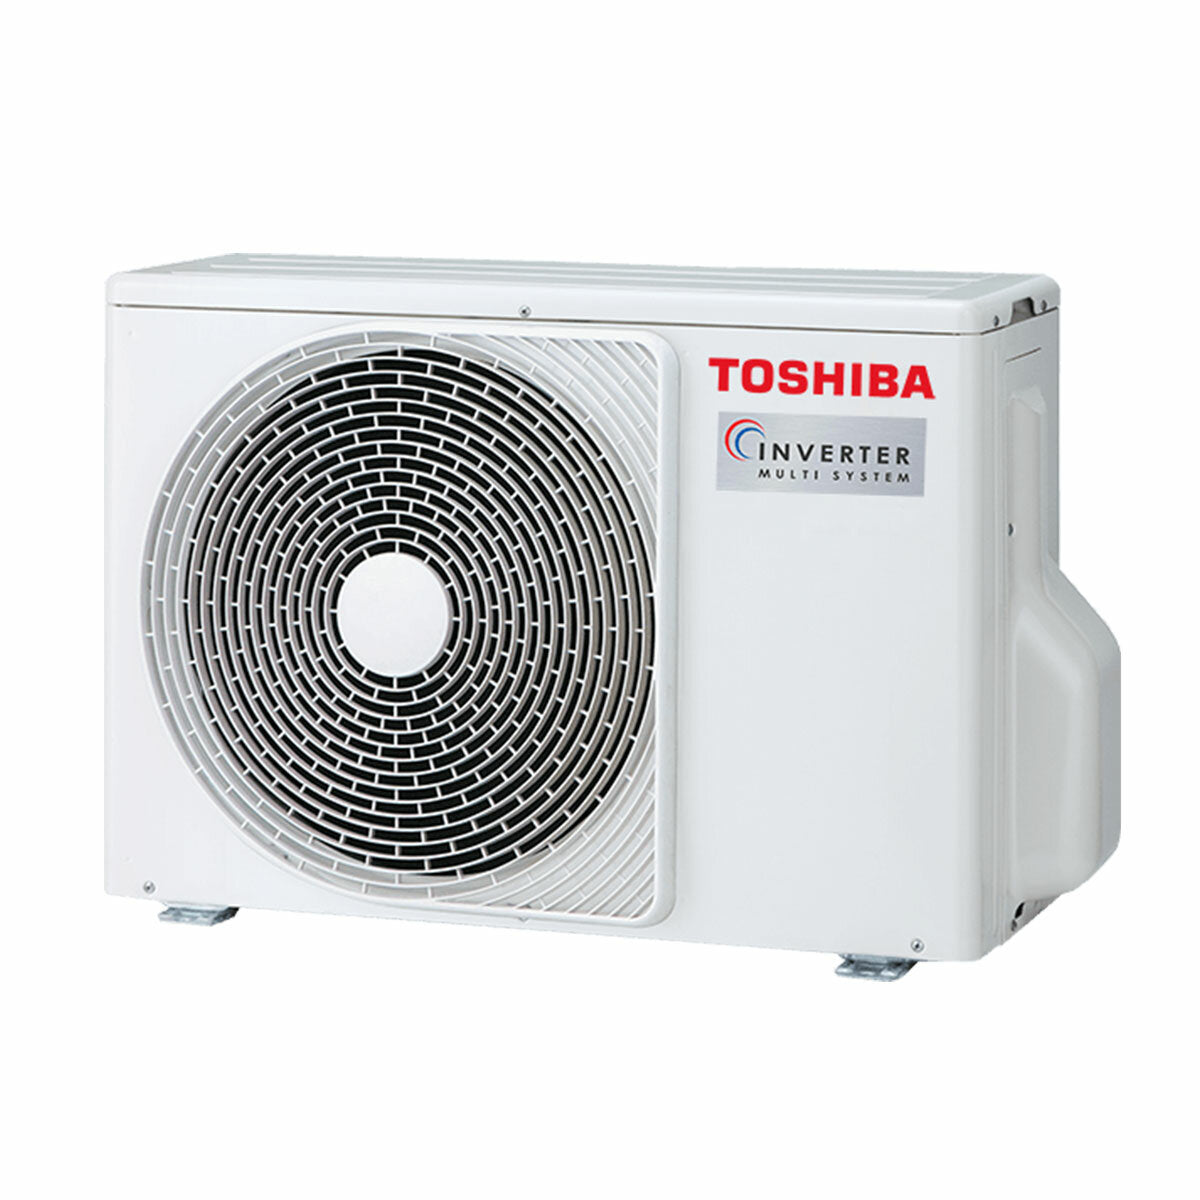 Toshiba ducted air conditioner U2 trial split 9000+12000+12000 BTU inverter A+++ external unit 7 kW